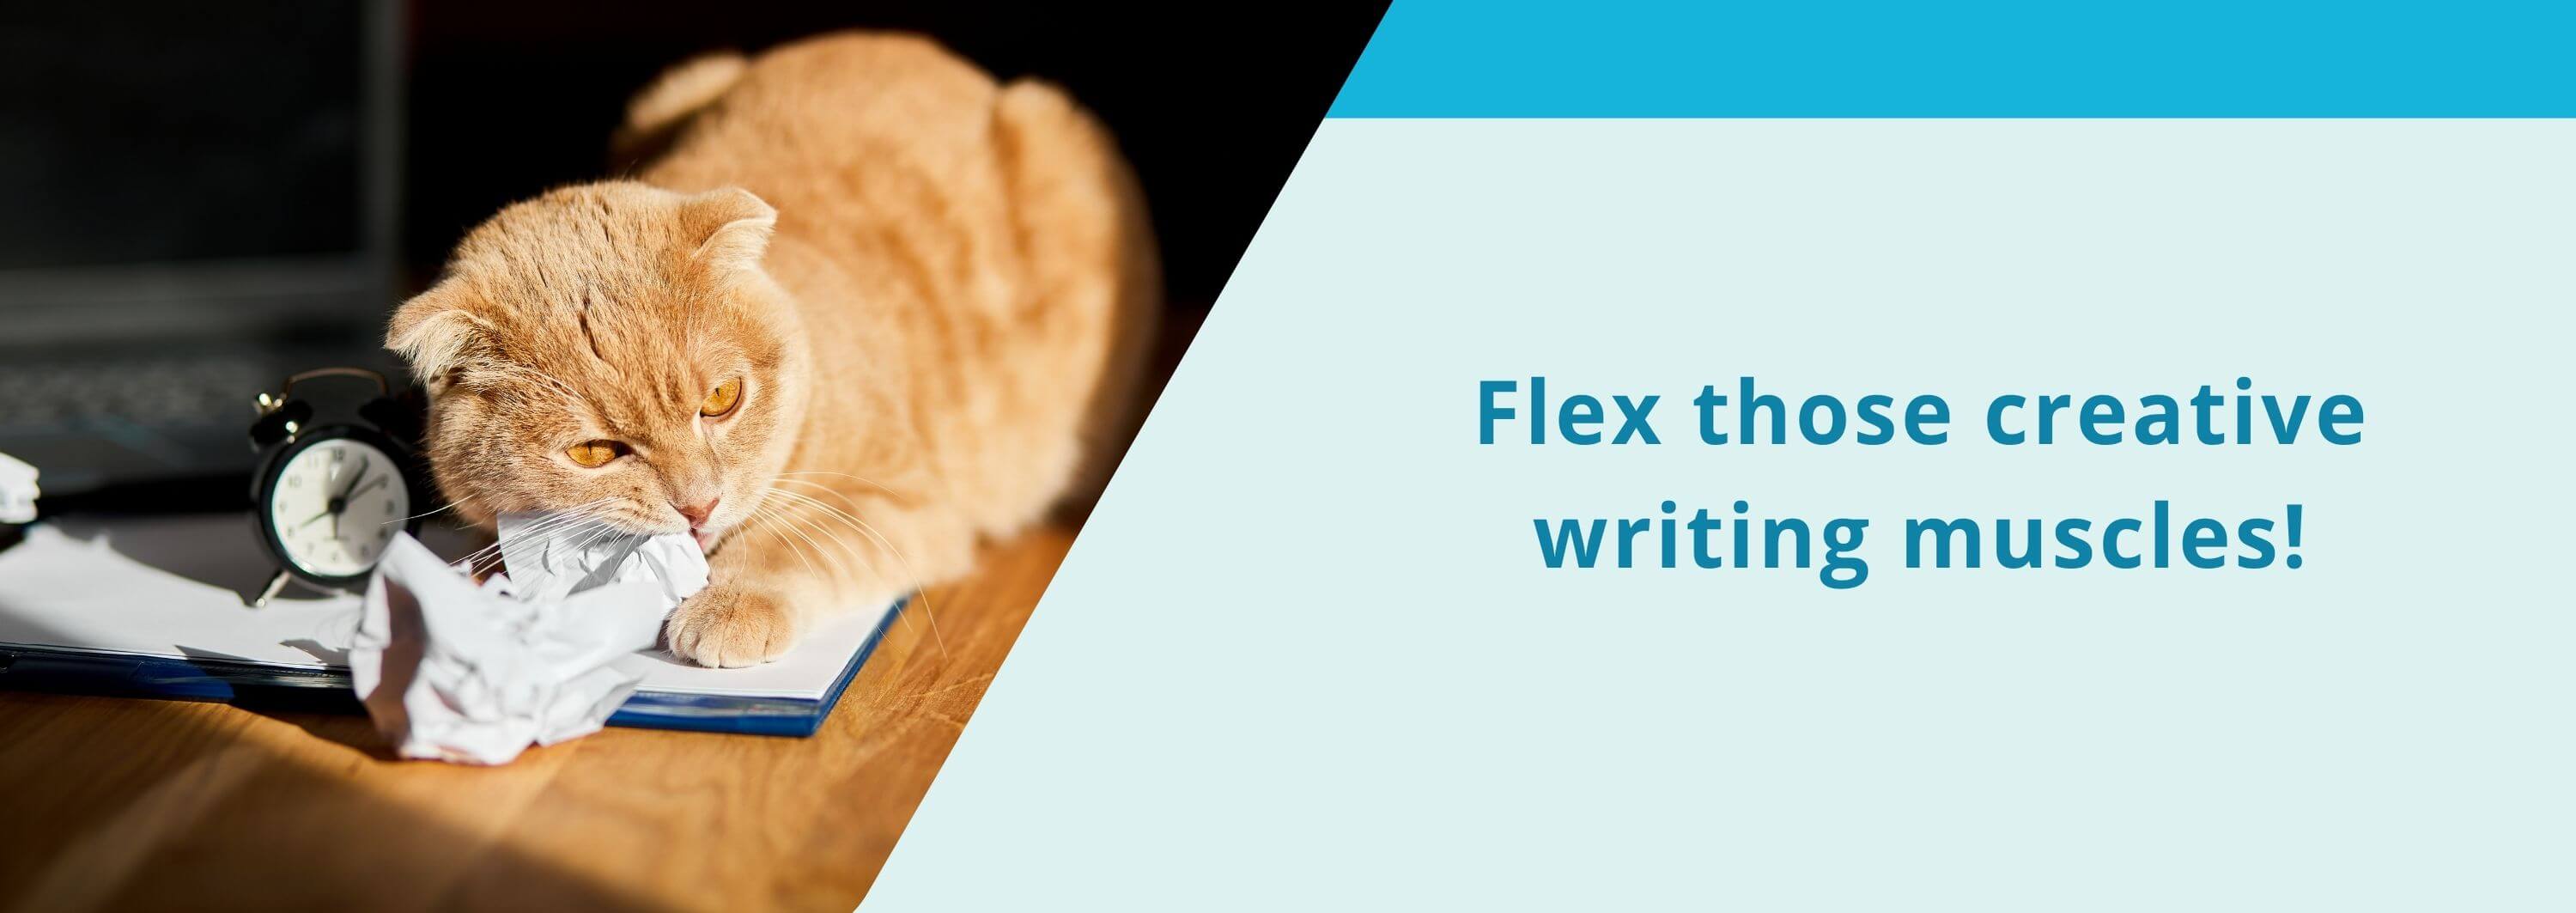 Flex those creative writing muscles!